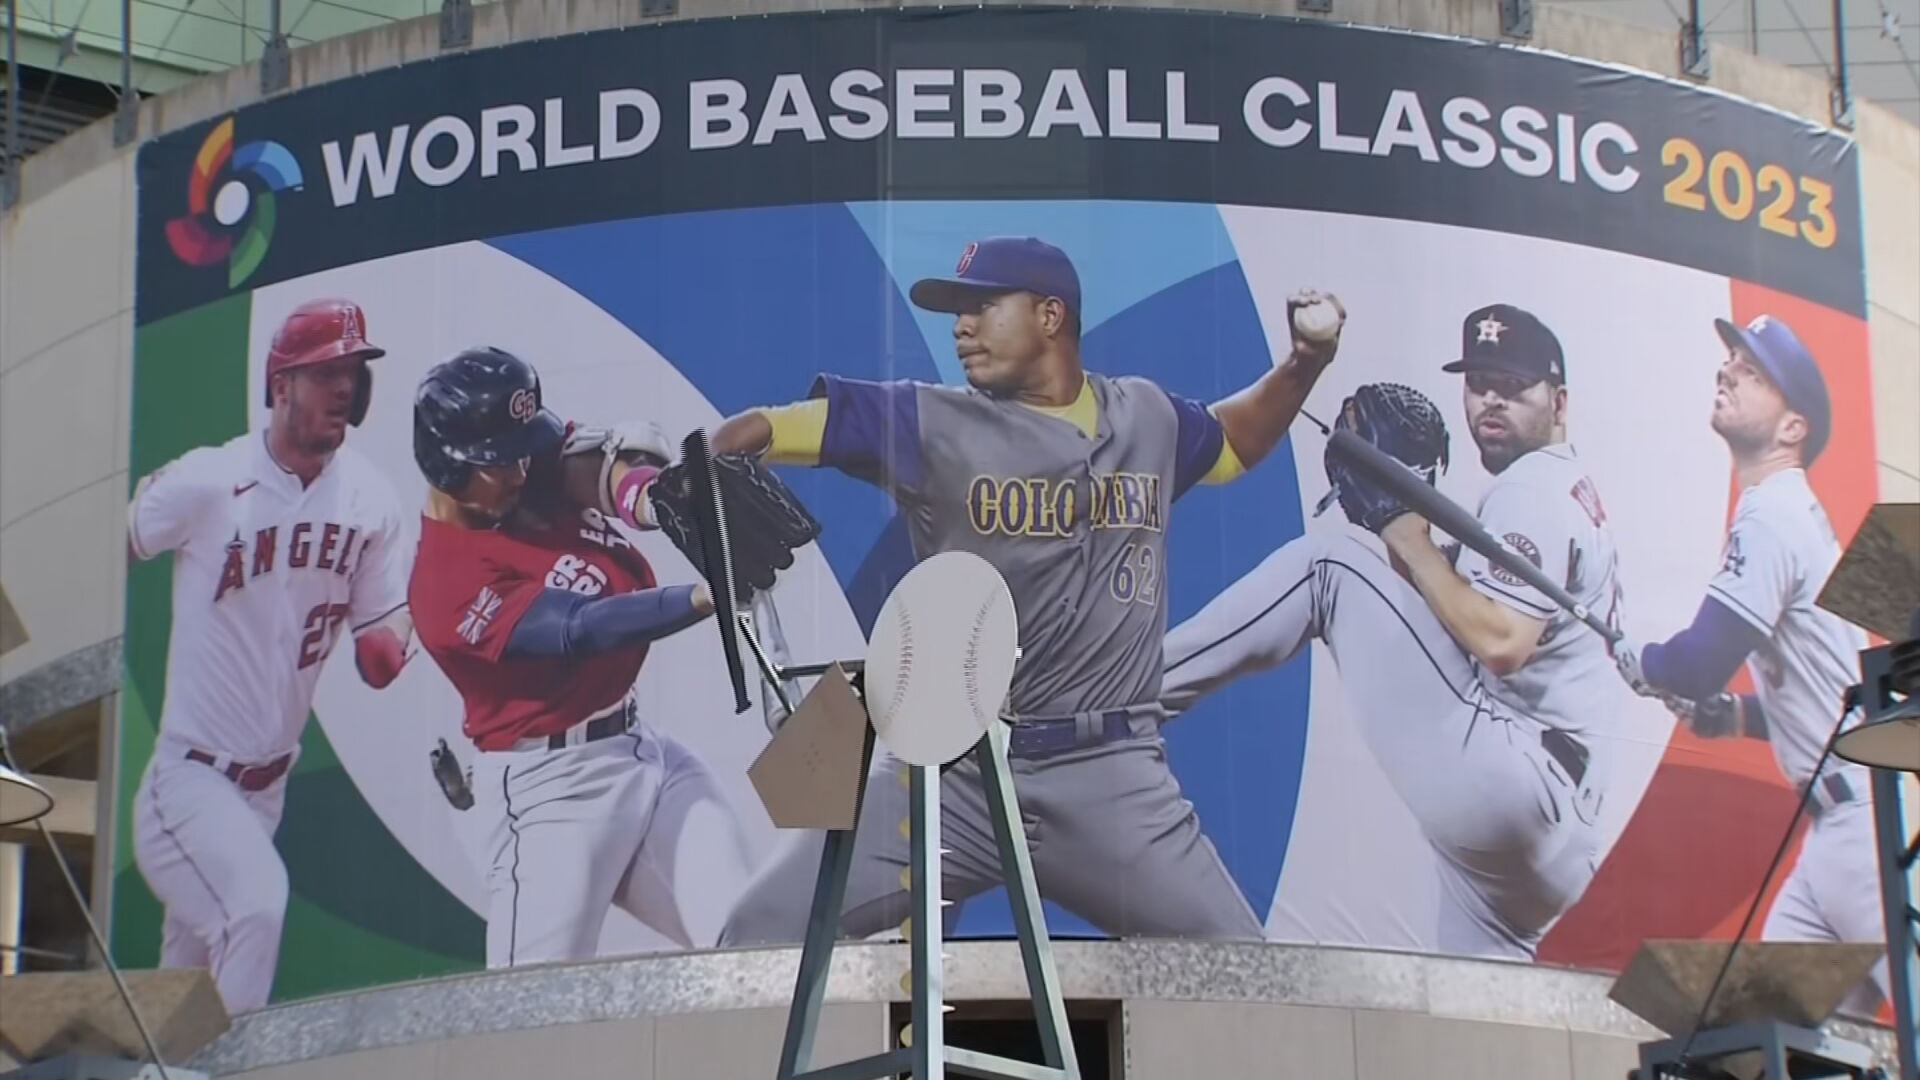 Chase Field, 2023 World Baseball Classic bring 2013 nostalgia